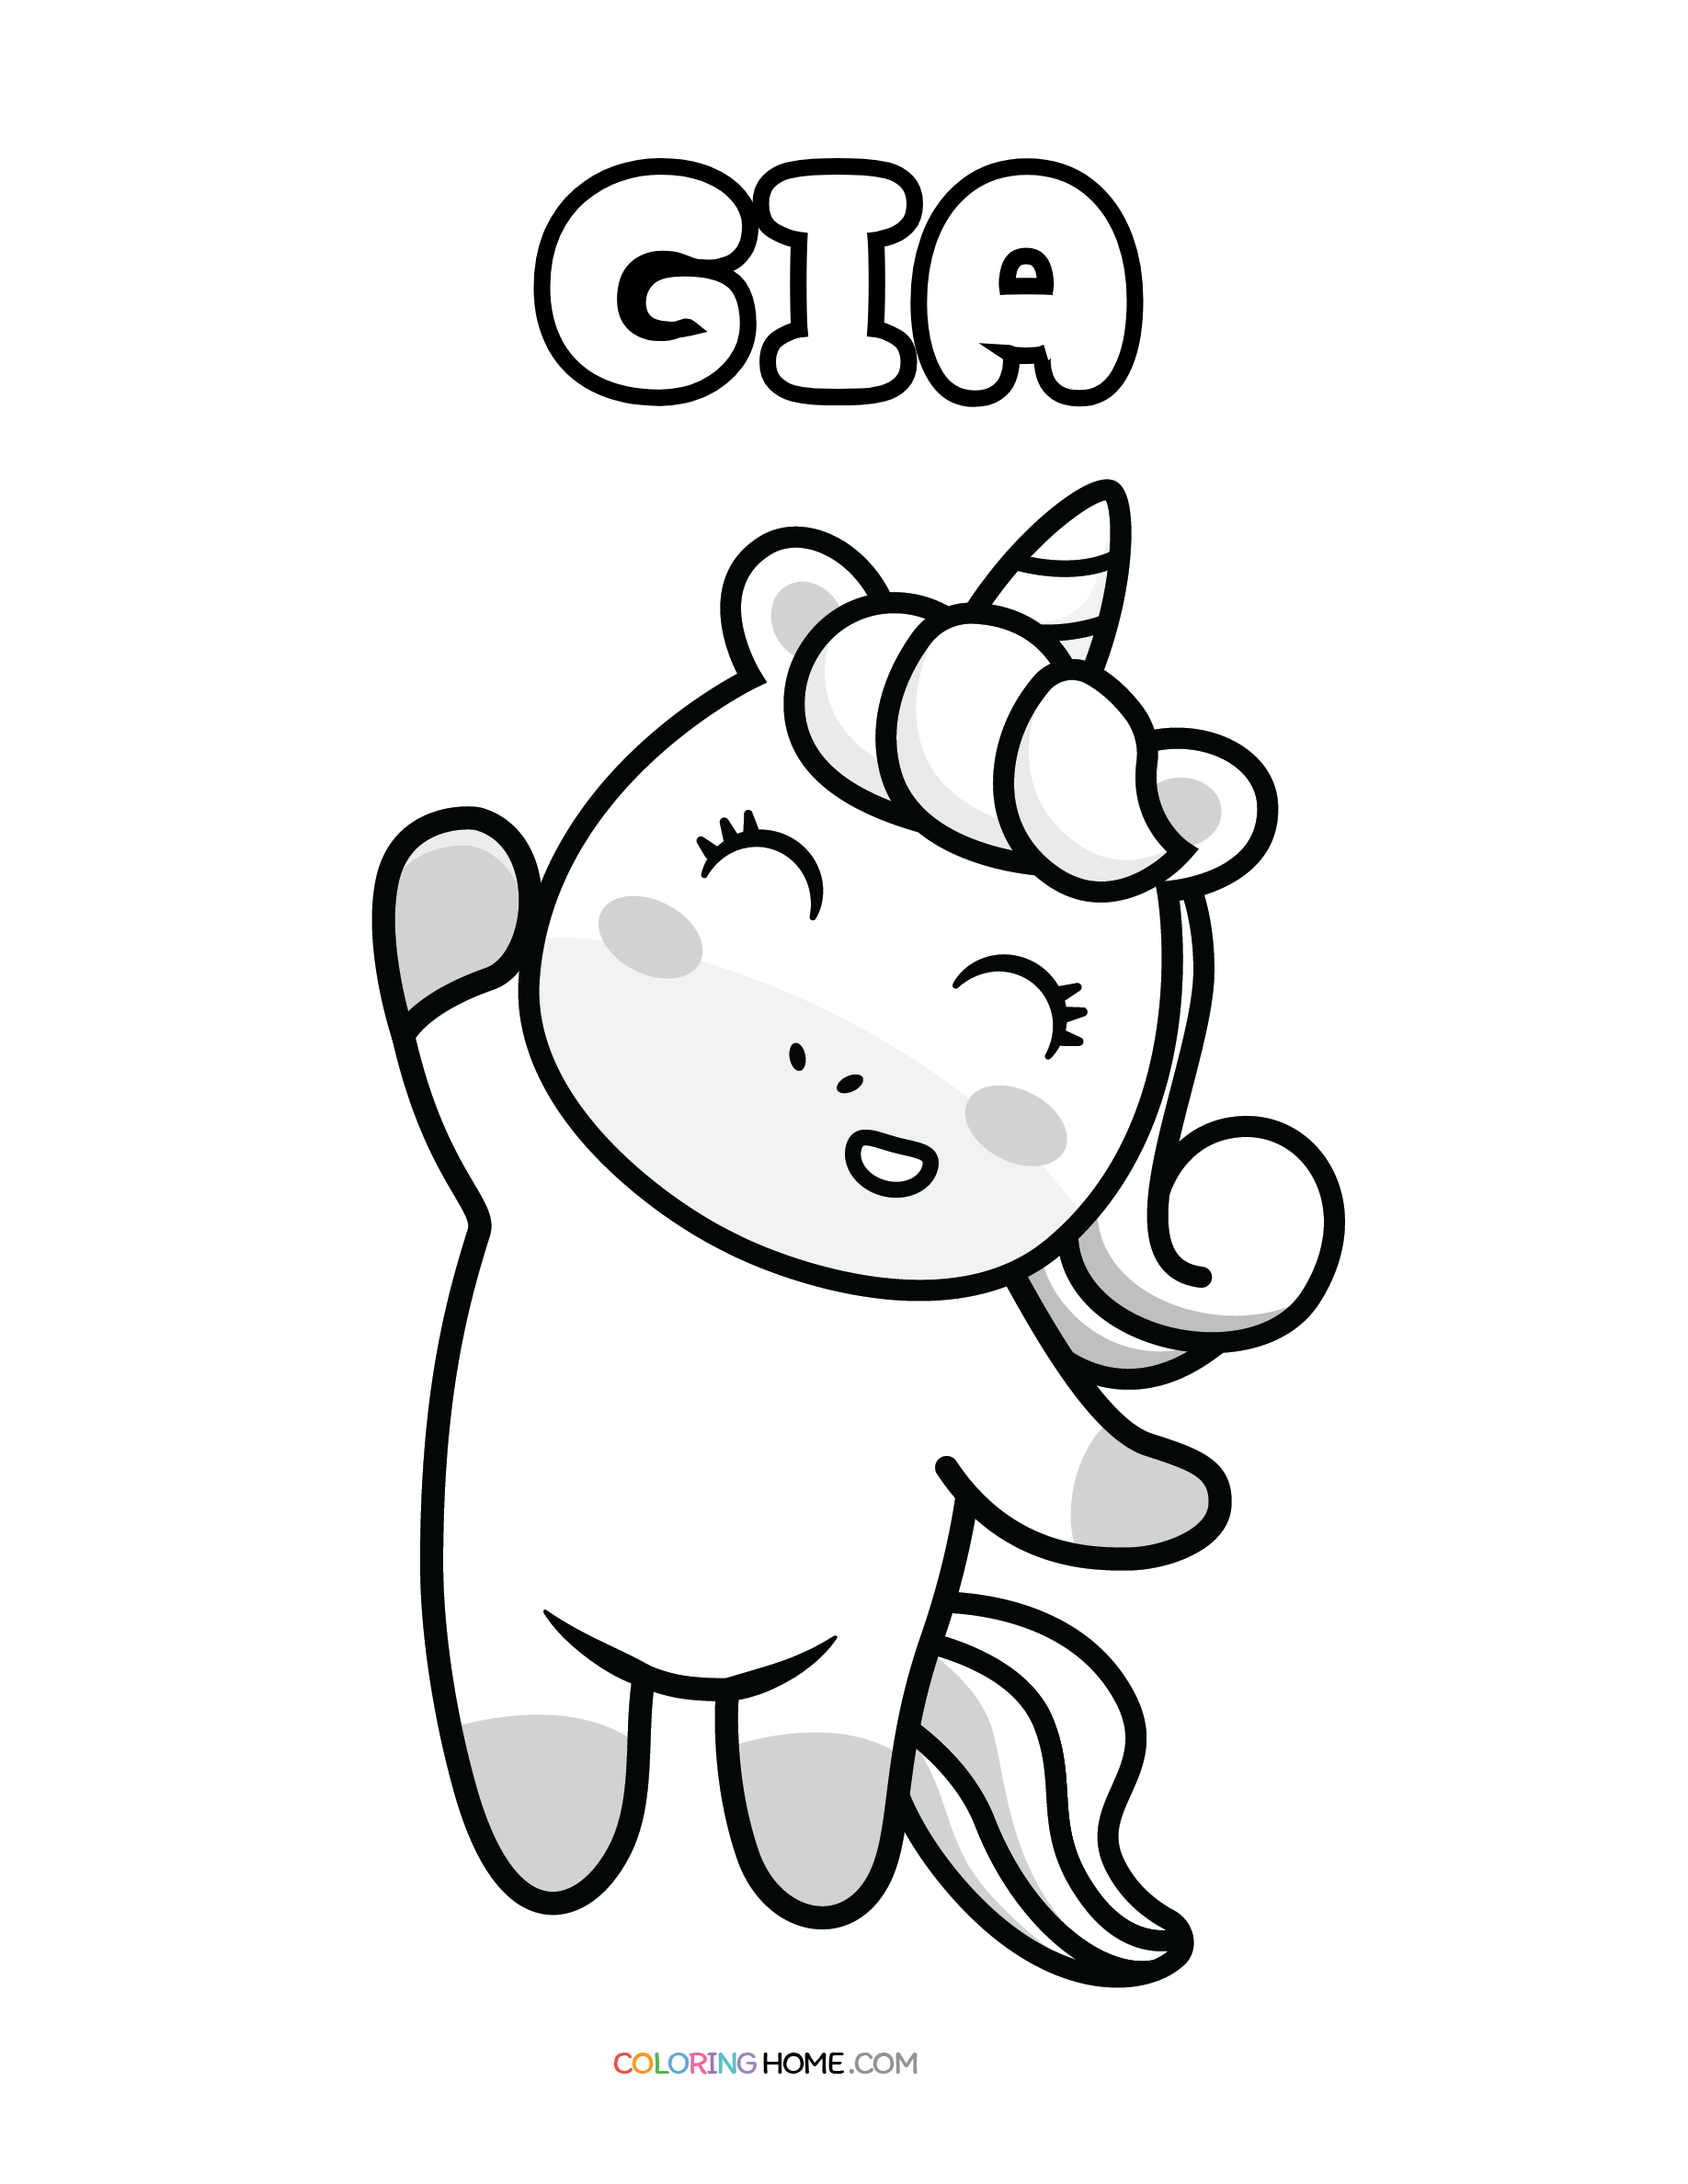 Gia unicorn coloring page